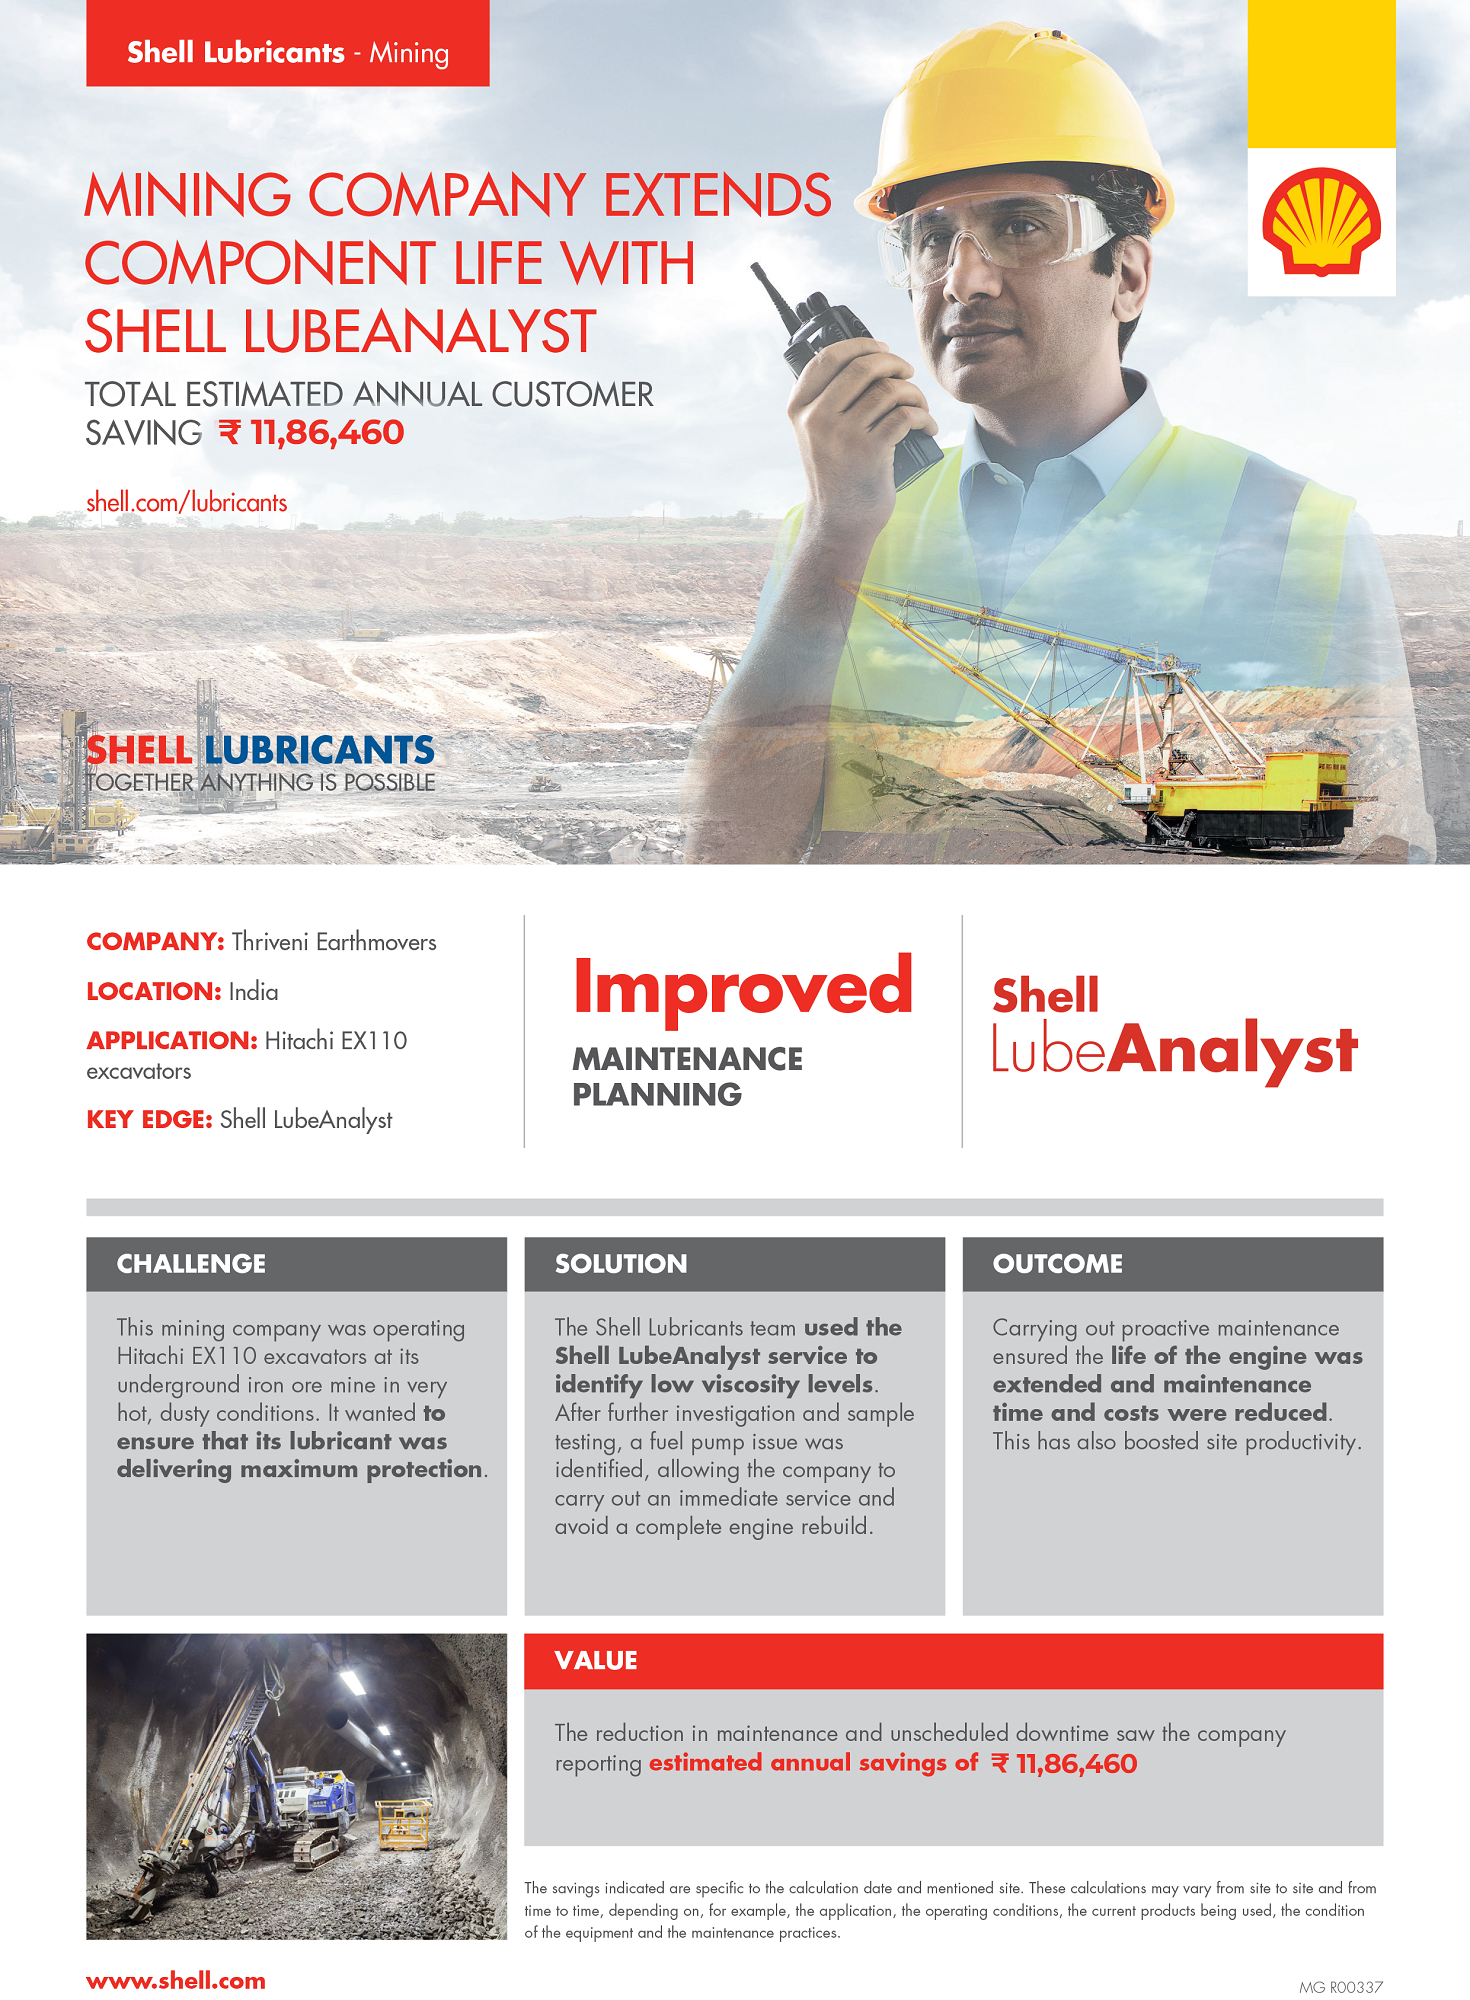 Shell LubeAnalyst (MG R00337-5)